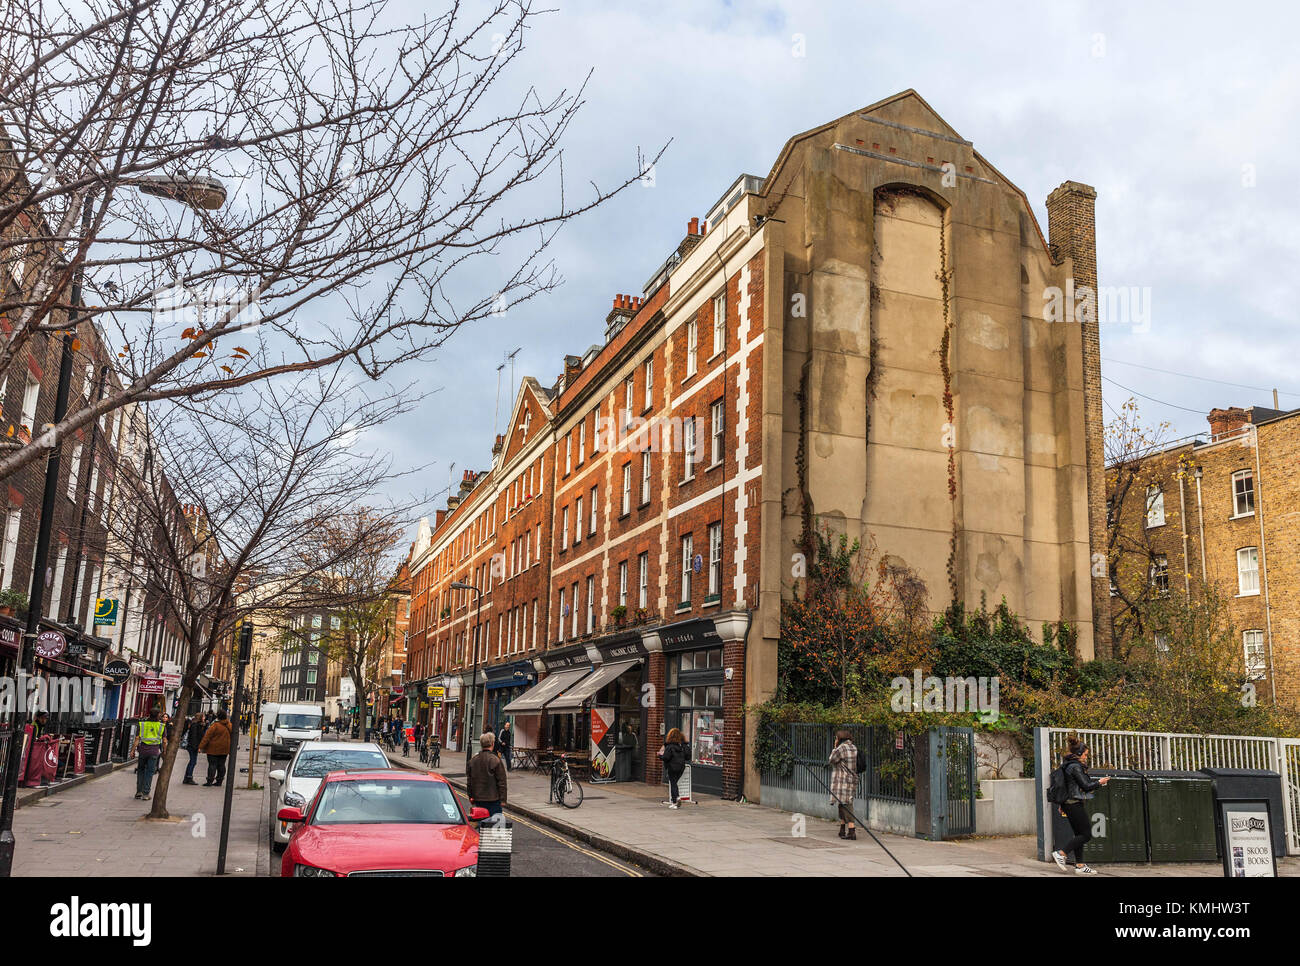 Marchmont street, Bloomsbury, London, England, UK. Stock Photo